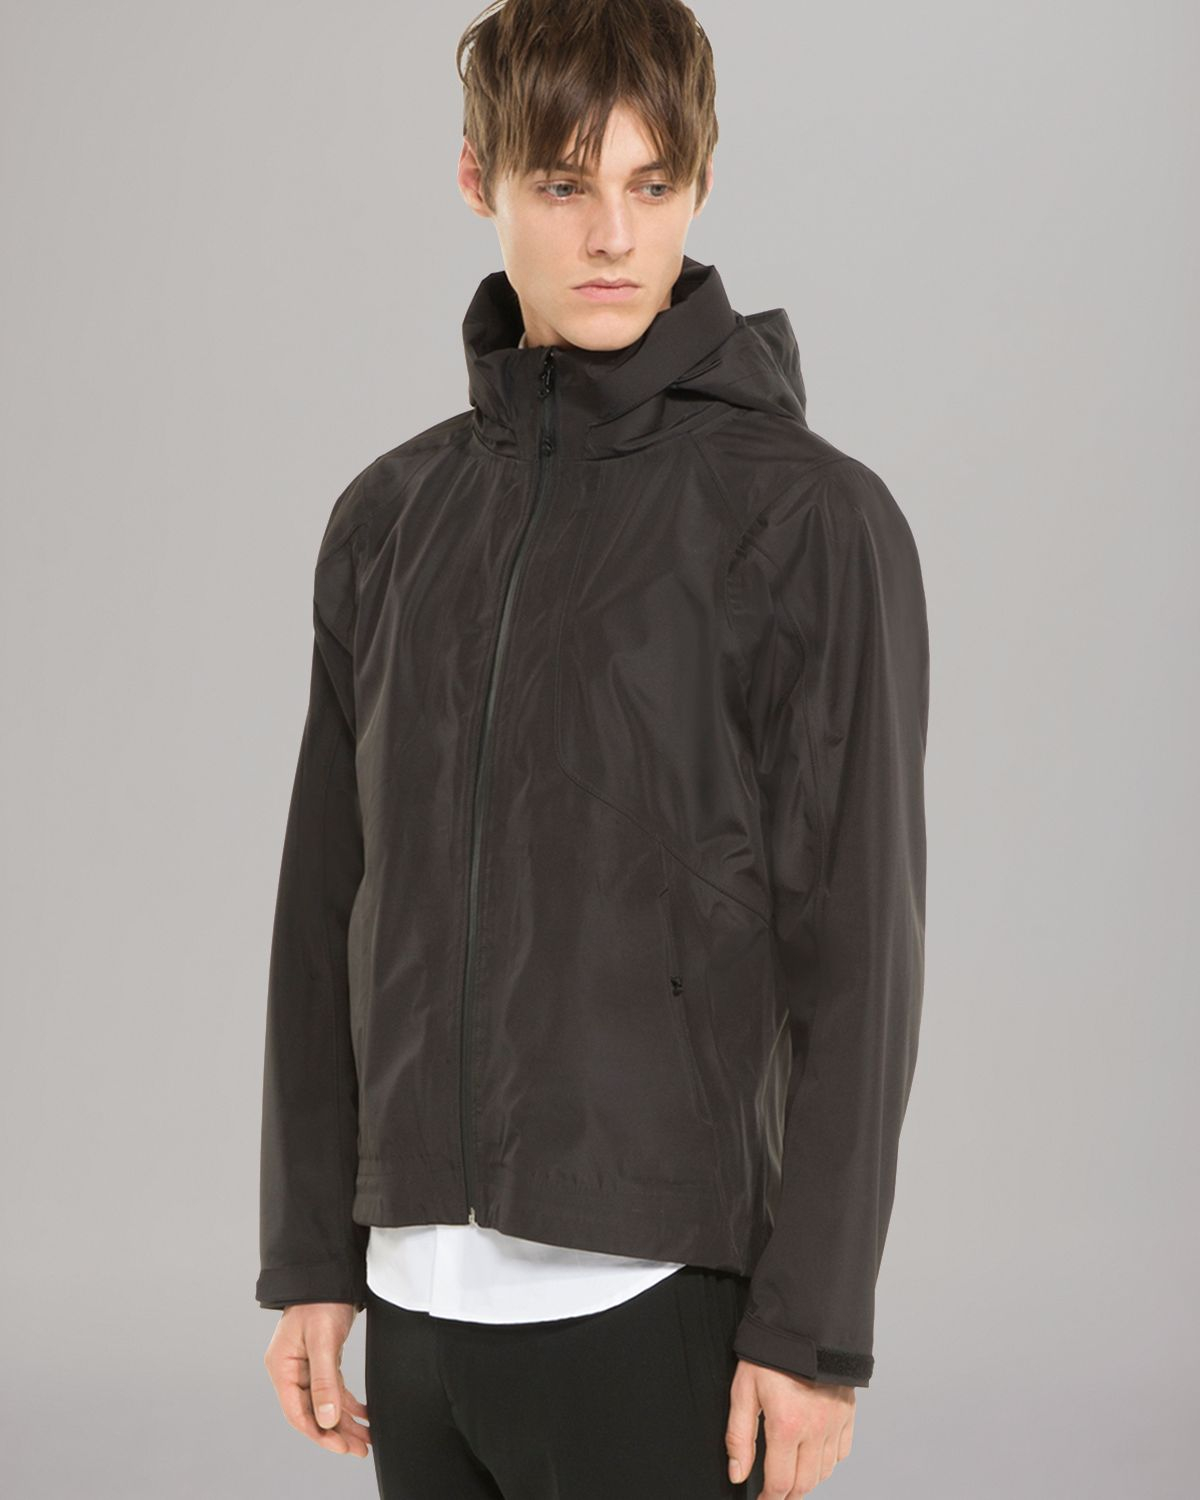 Lyst - Sandro Waterfall Hooded Jacket in Black for Men